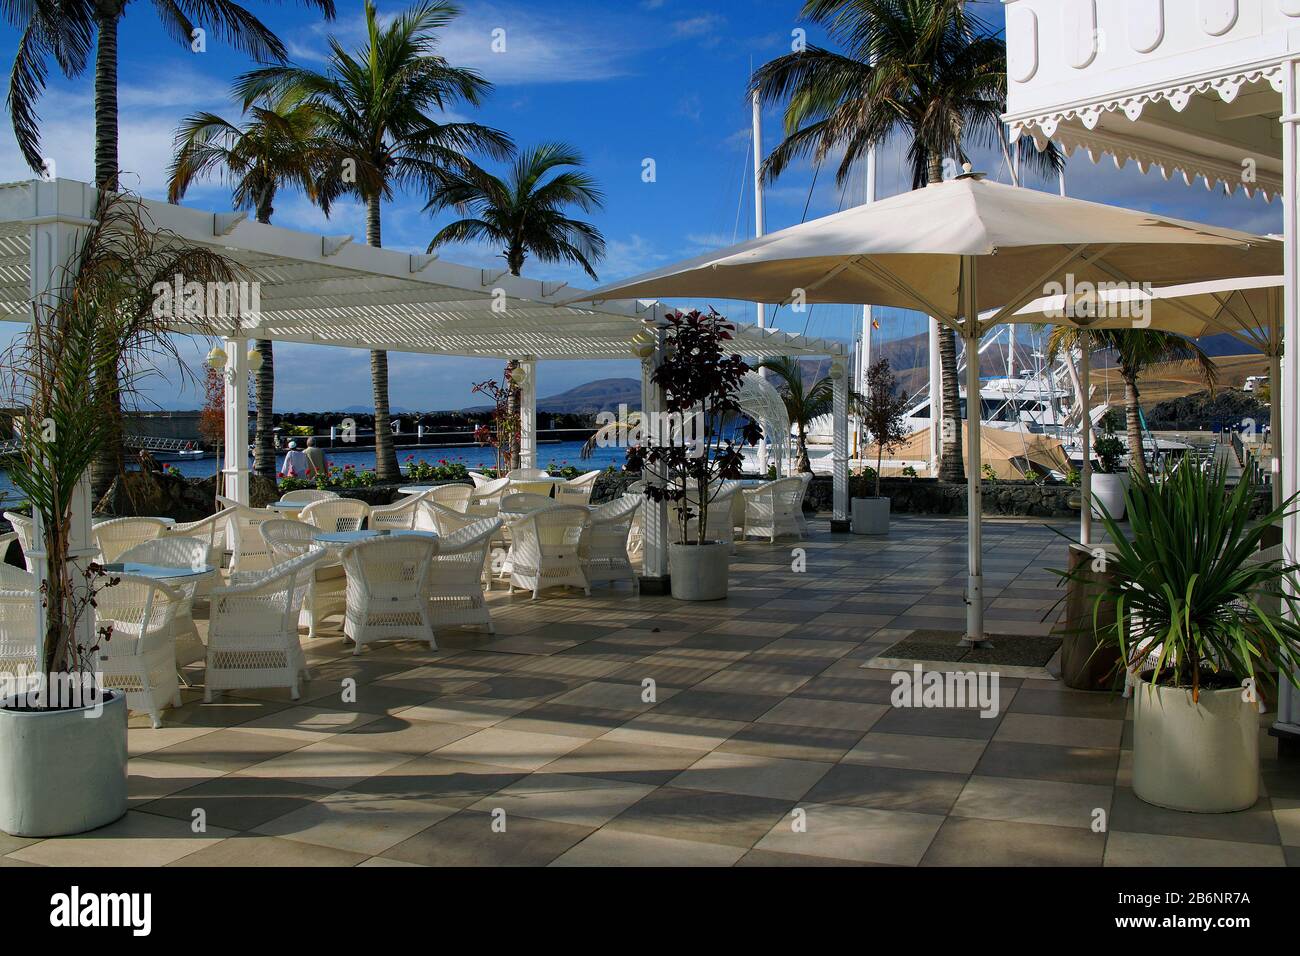 Kanarische Inseln, Lanzarote, Puerto Calero, Restaurant, Banque D'Images